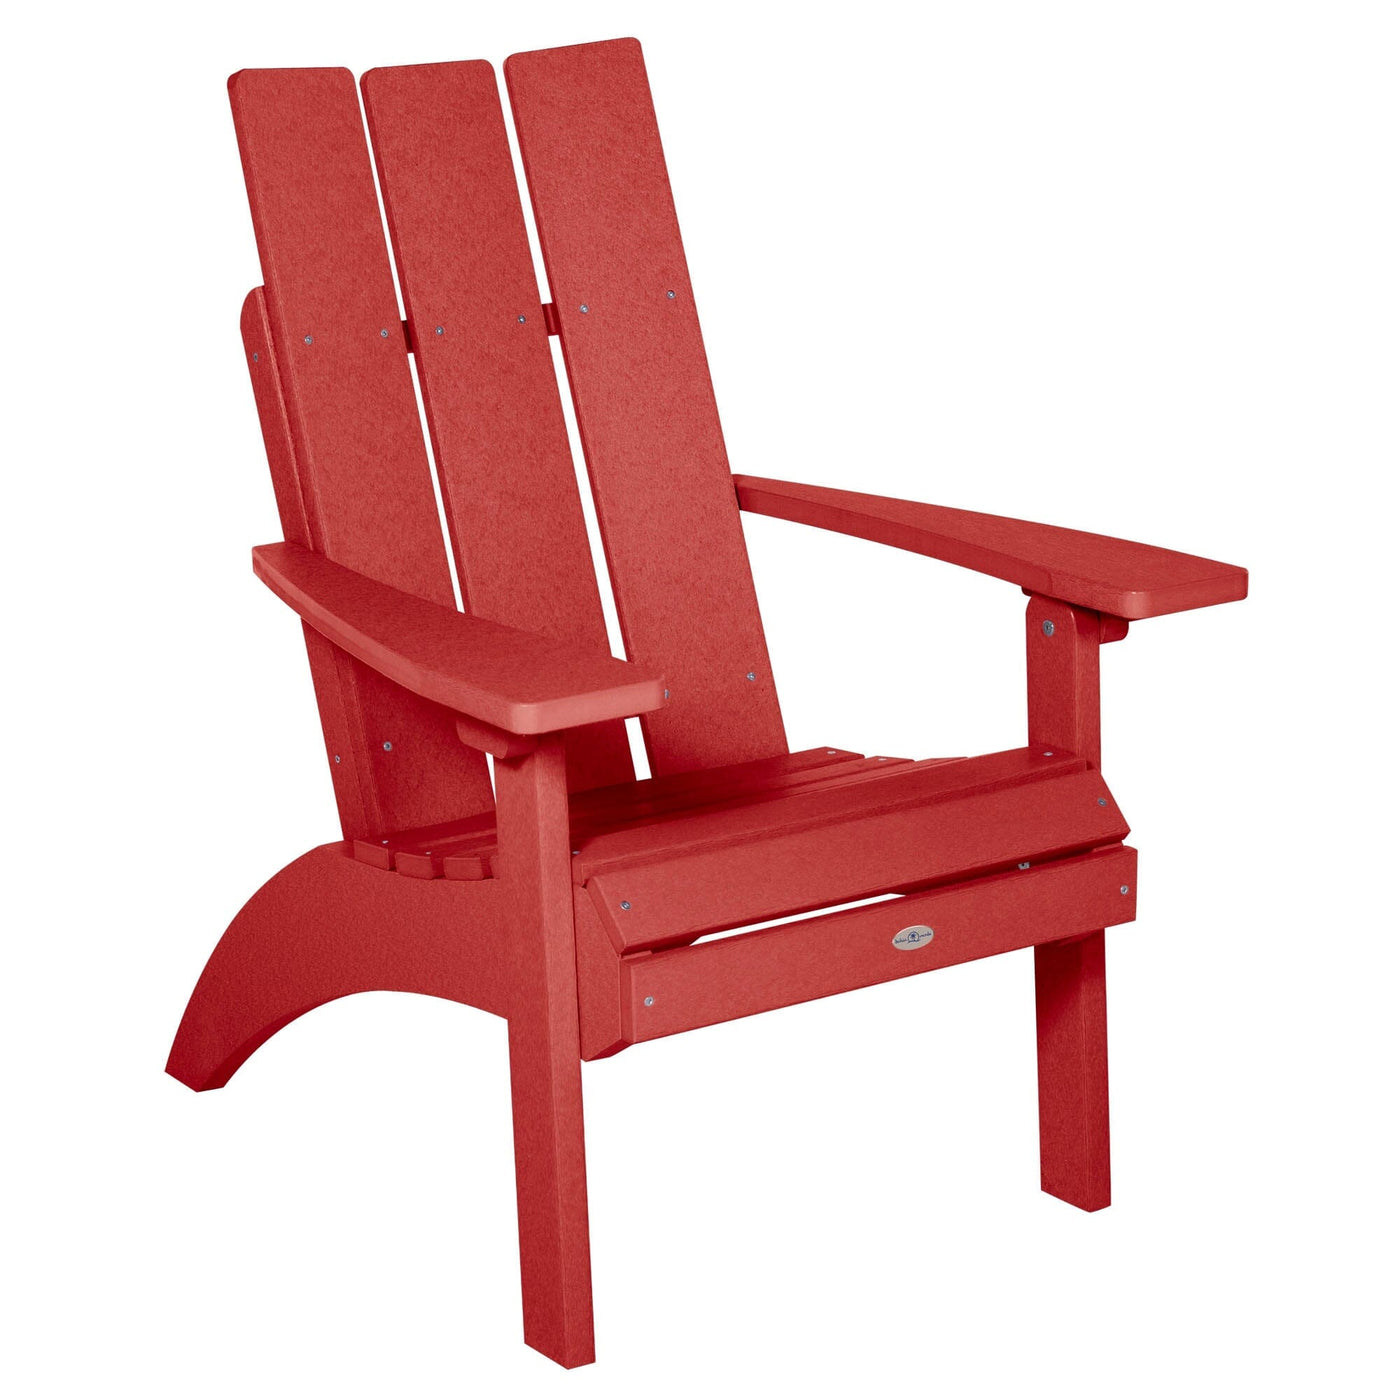 Corolla Comfort Height Adirondack Chair Chair Bahia Verde Outdoors Boathouse Red 